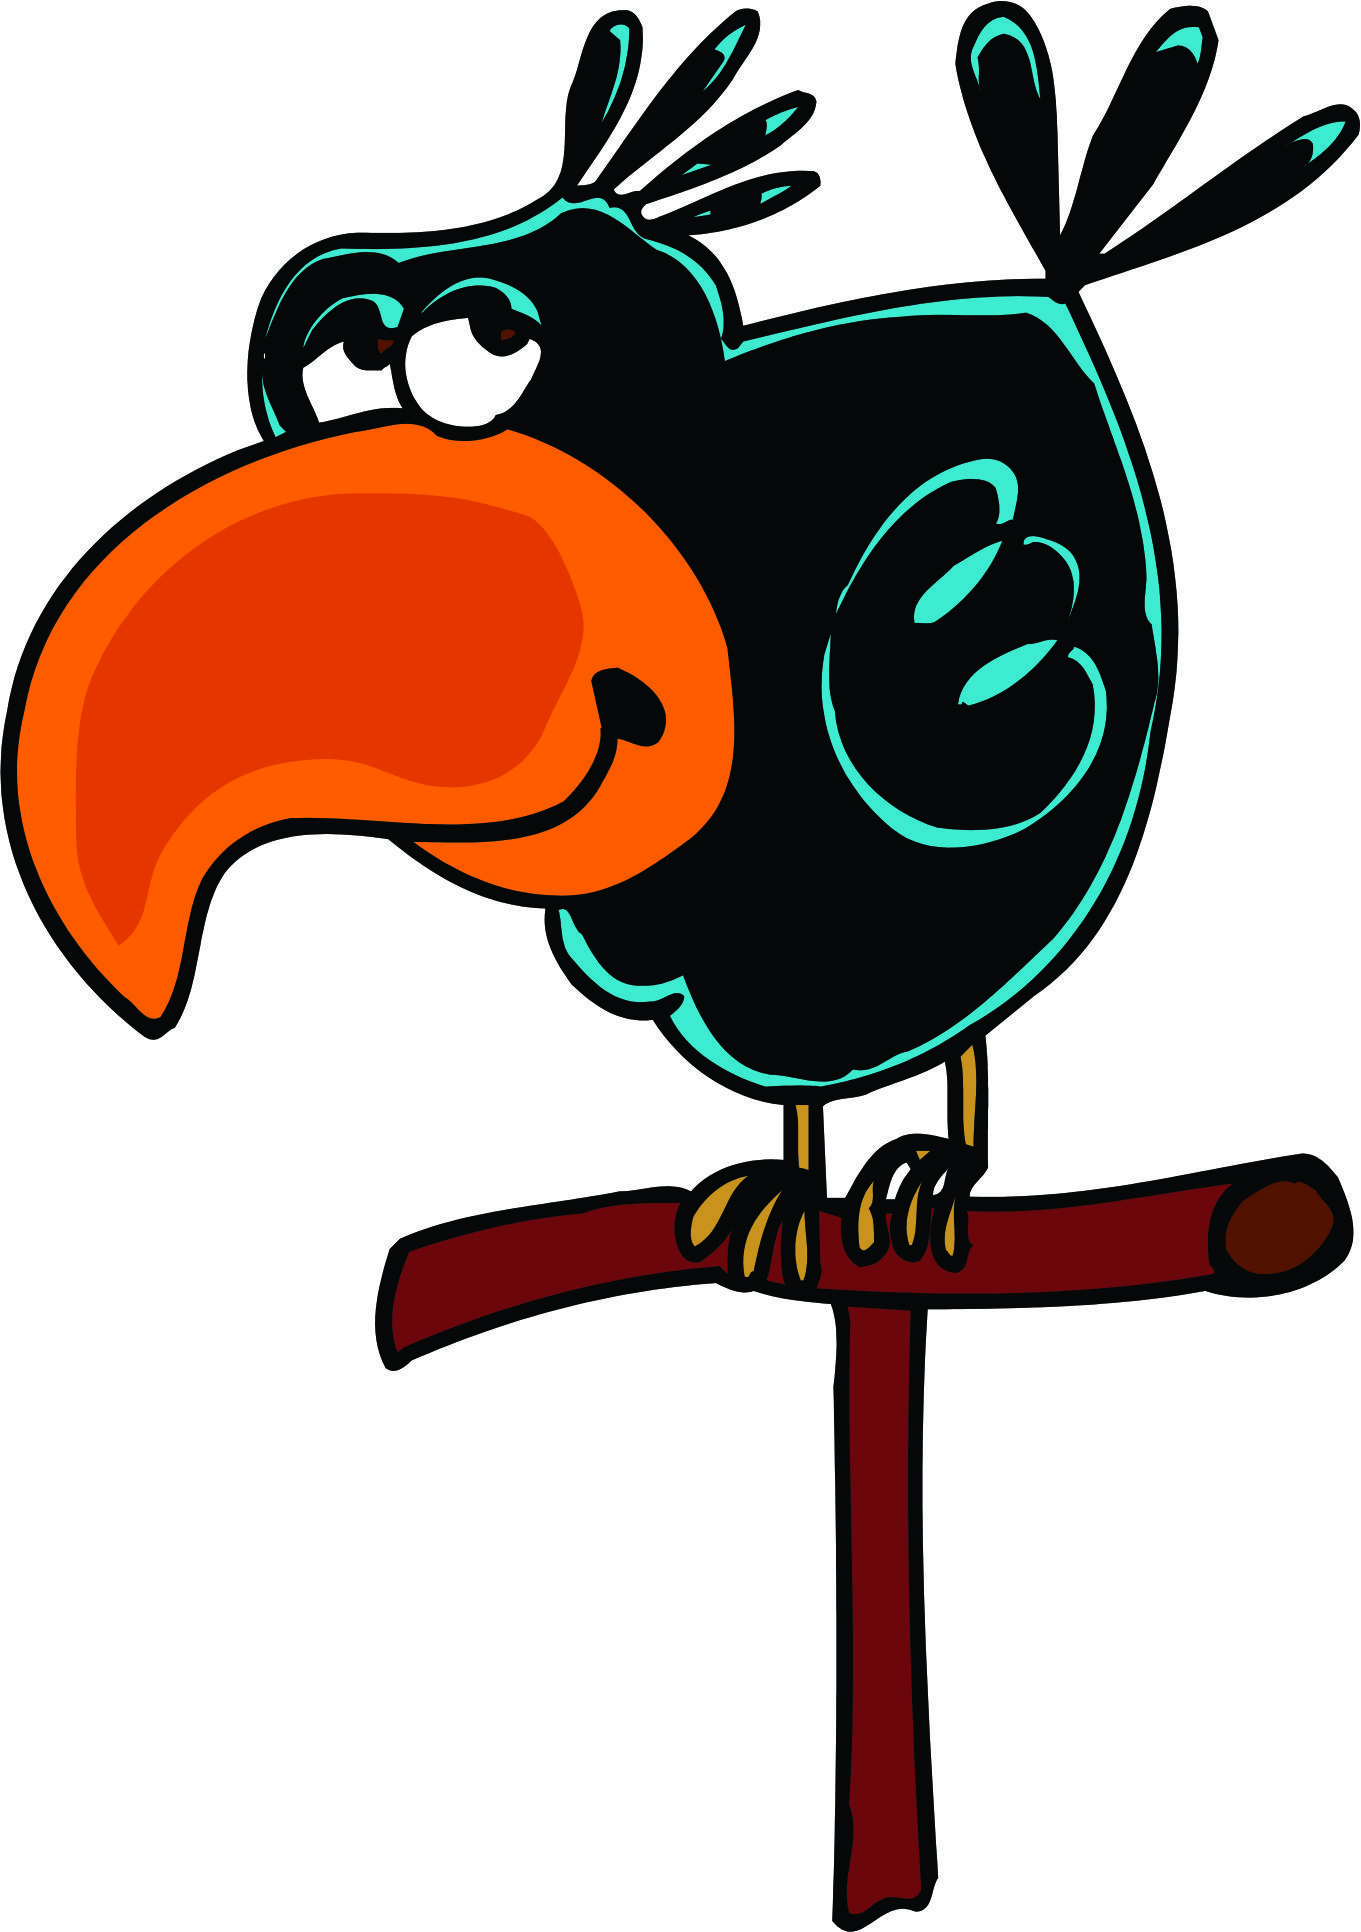 Crow clipart crow beak. Cartoon characters free crows